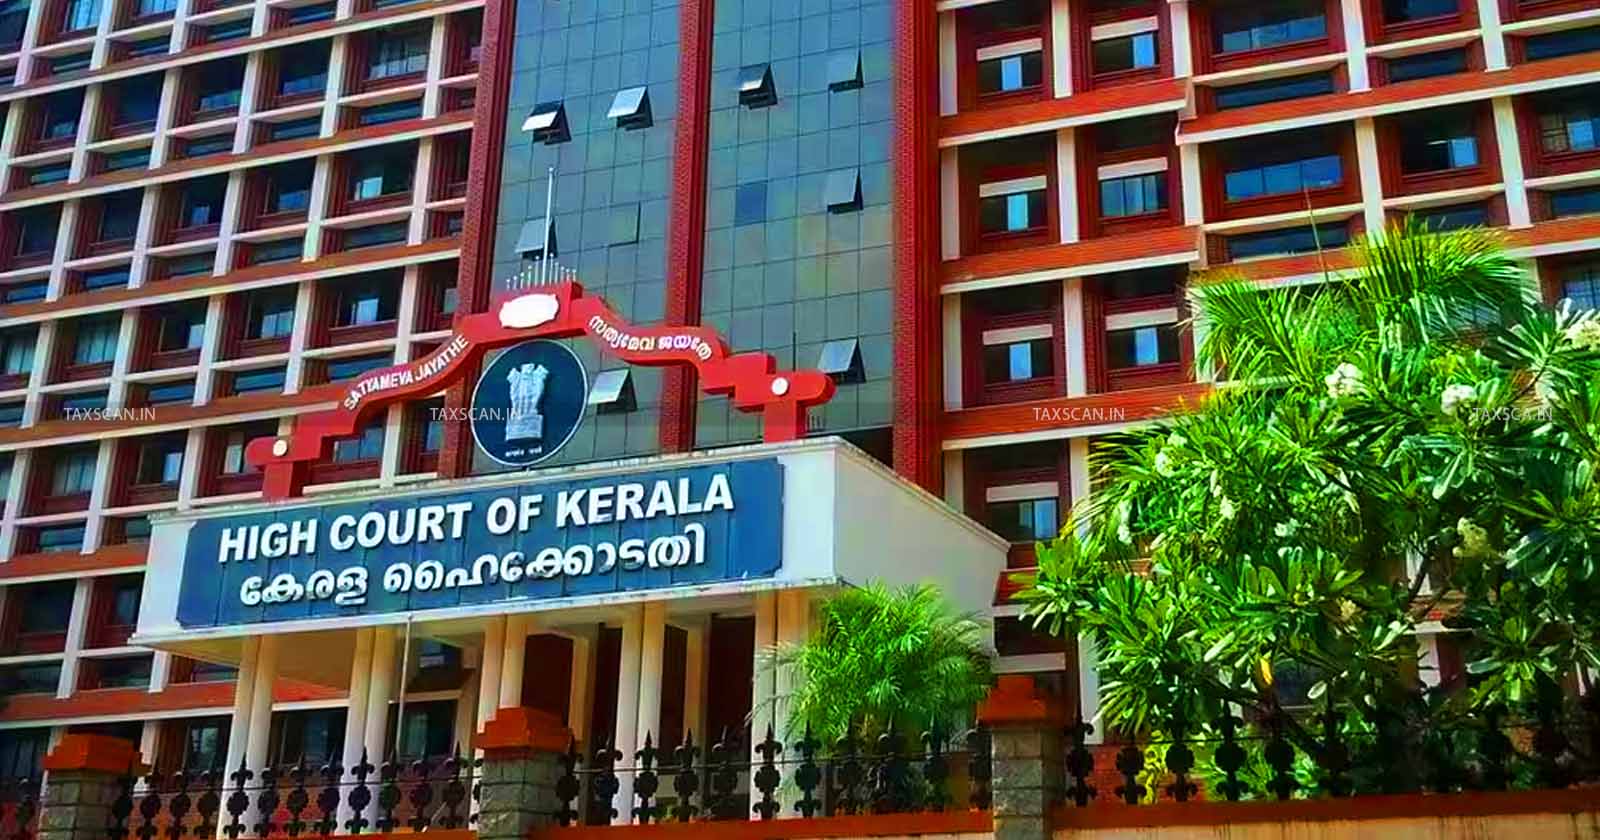 Kerala high court - Kerala hc - Kerala hc news - kerala income tax department - Sea pride fuels - TAXSCAN